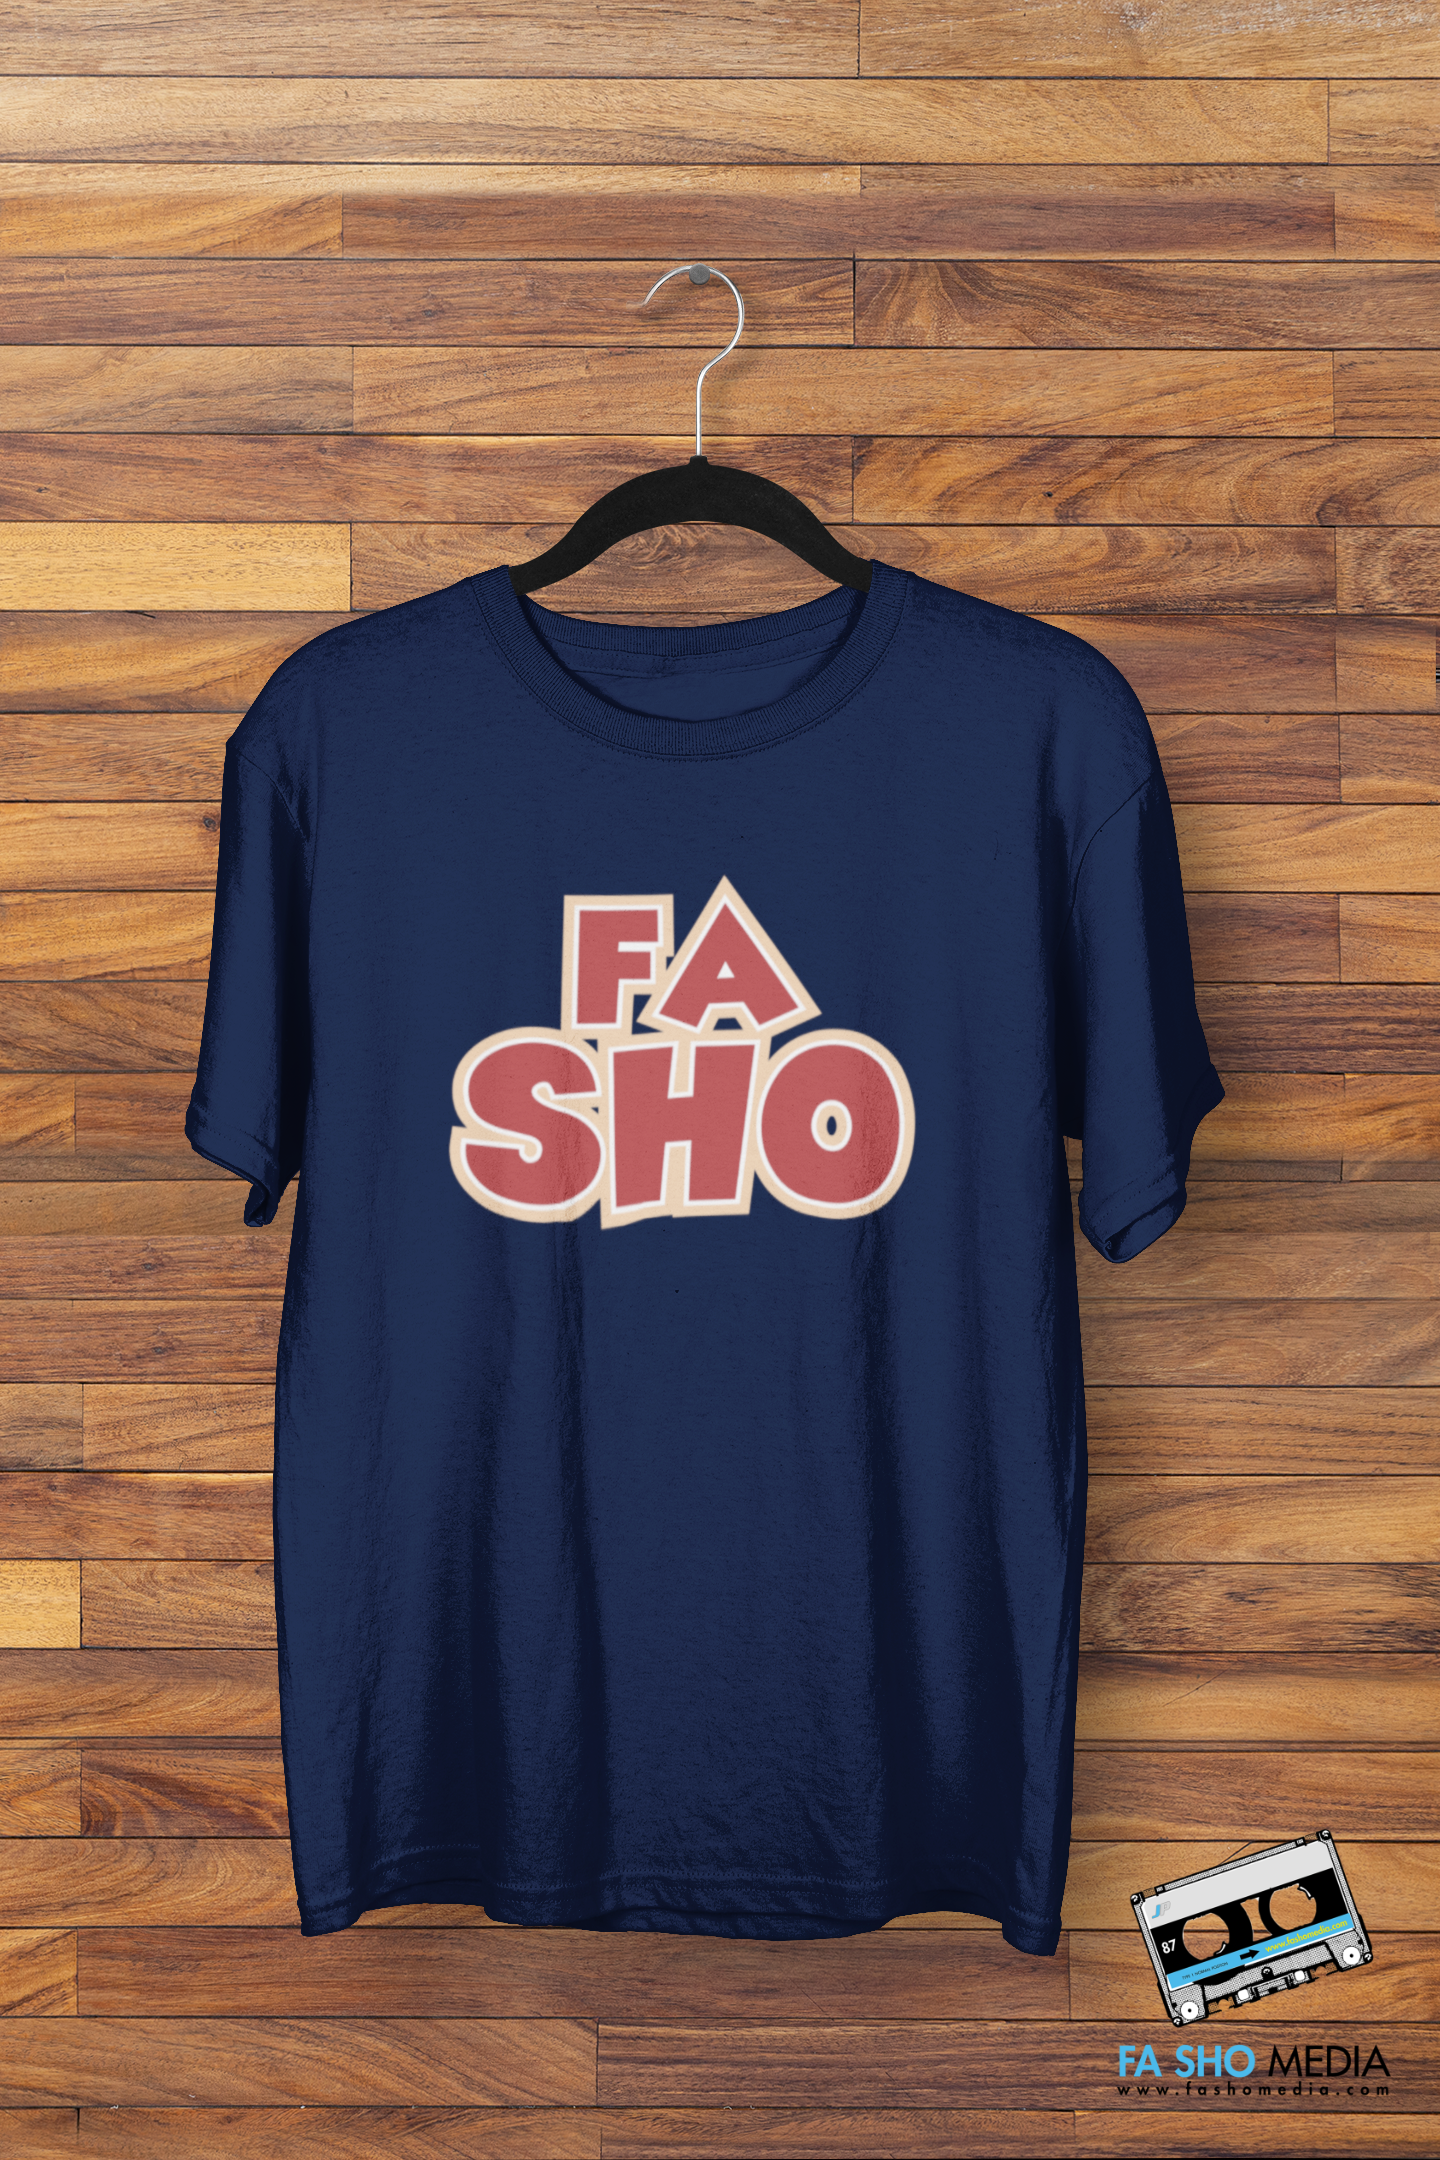 Fa Sho Graffiti Shirt